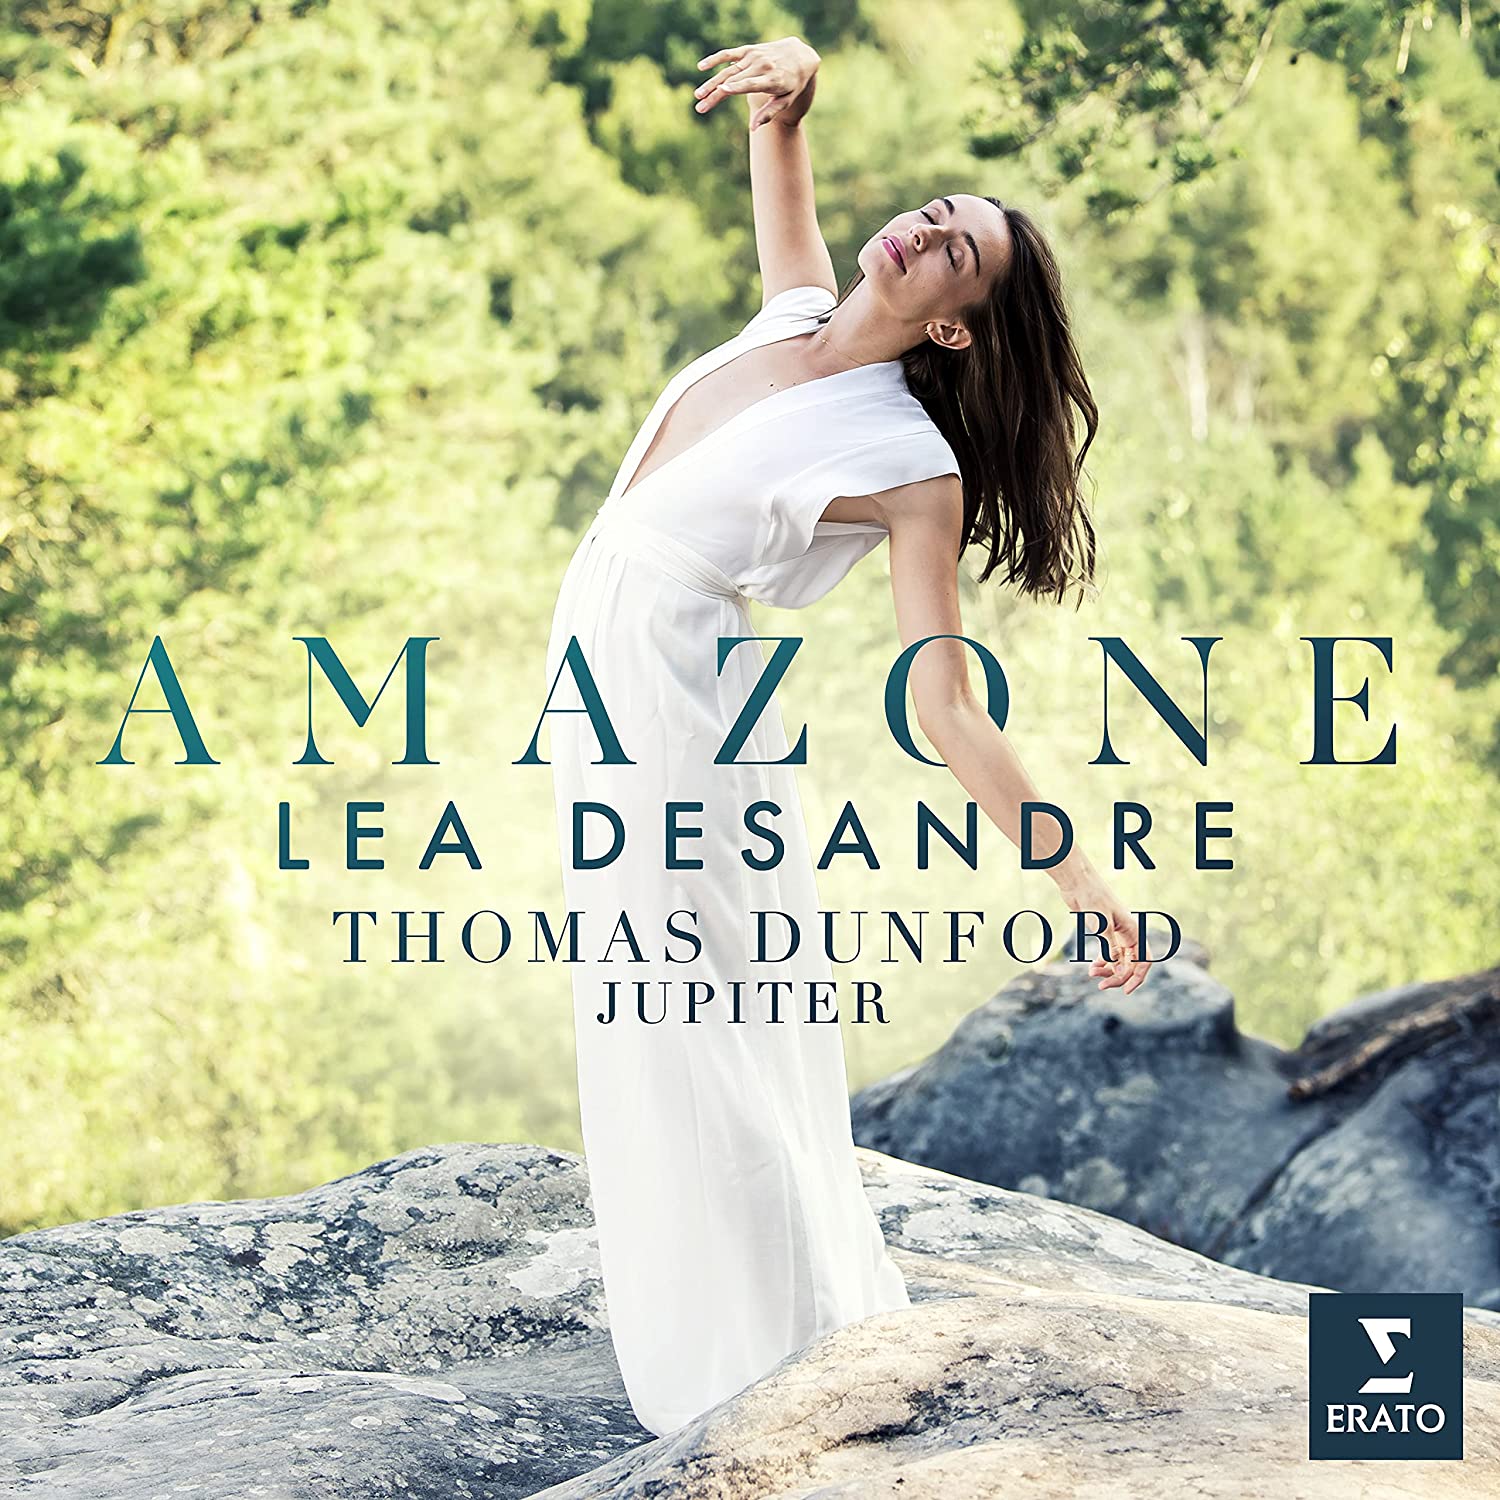 CD cover Amazone Lea Desandre Jupiter Thomas Dunsford